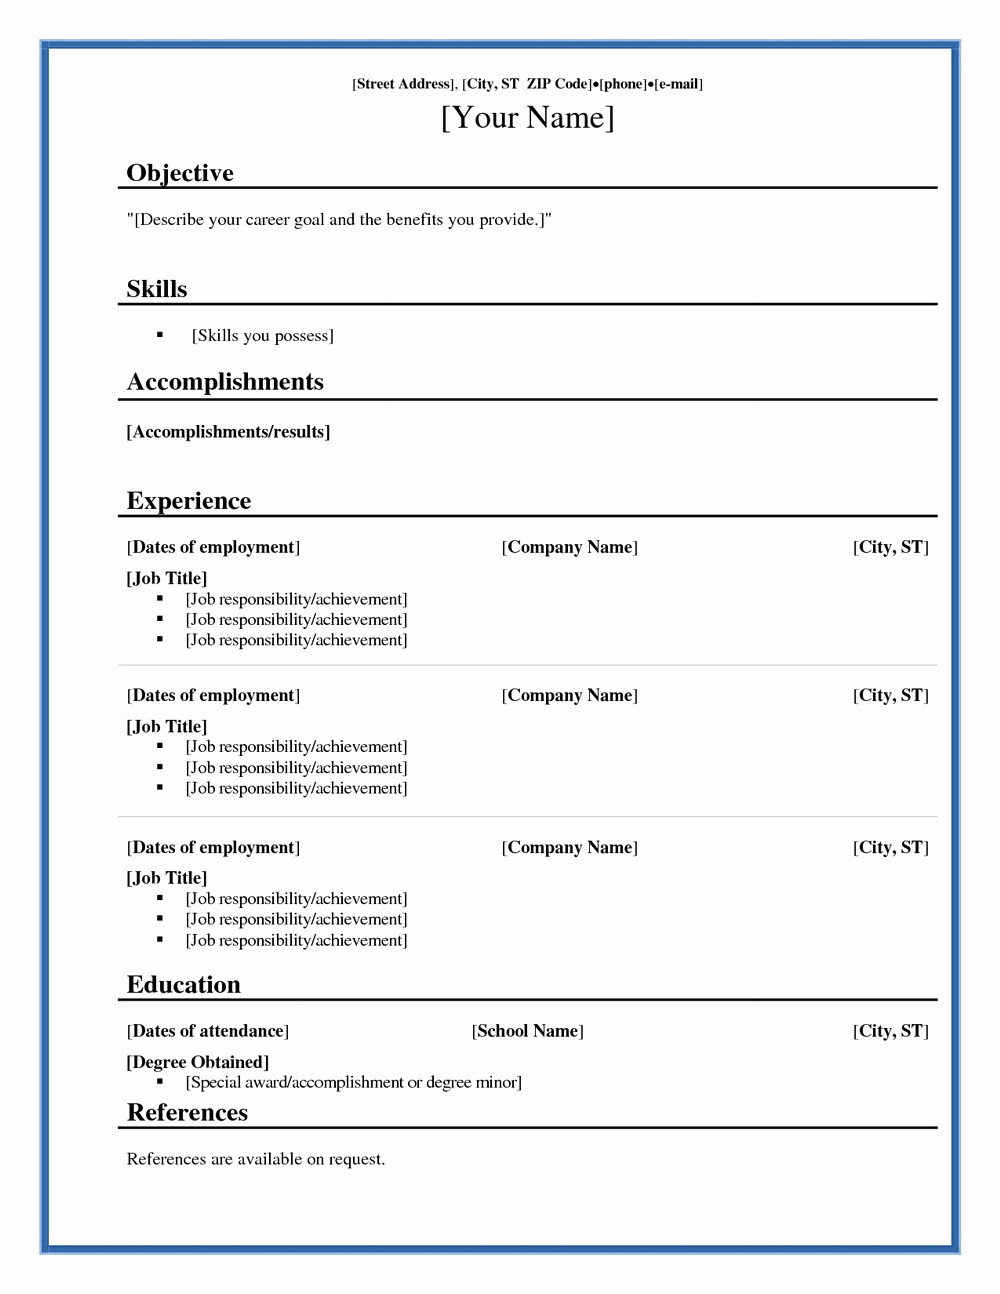 Resume format In Microsoft Word Beautiful Word Resume formats English Worksheet Resume Blank Blank